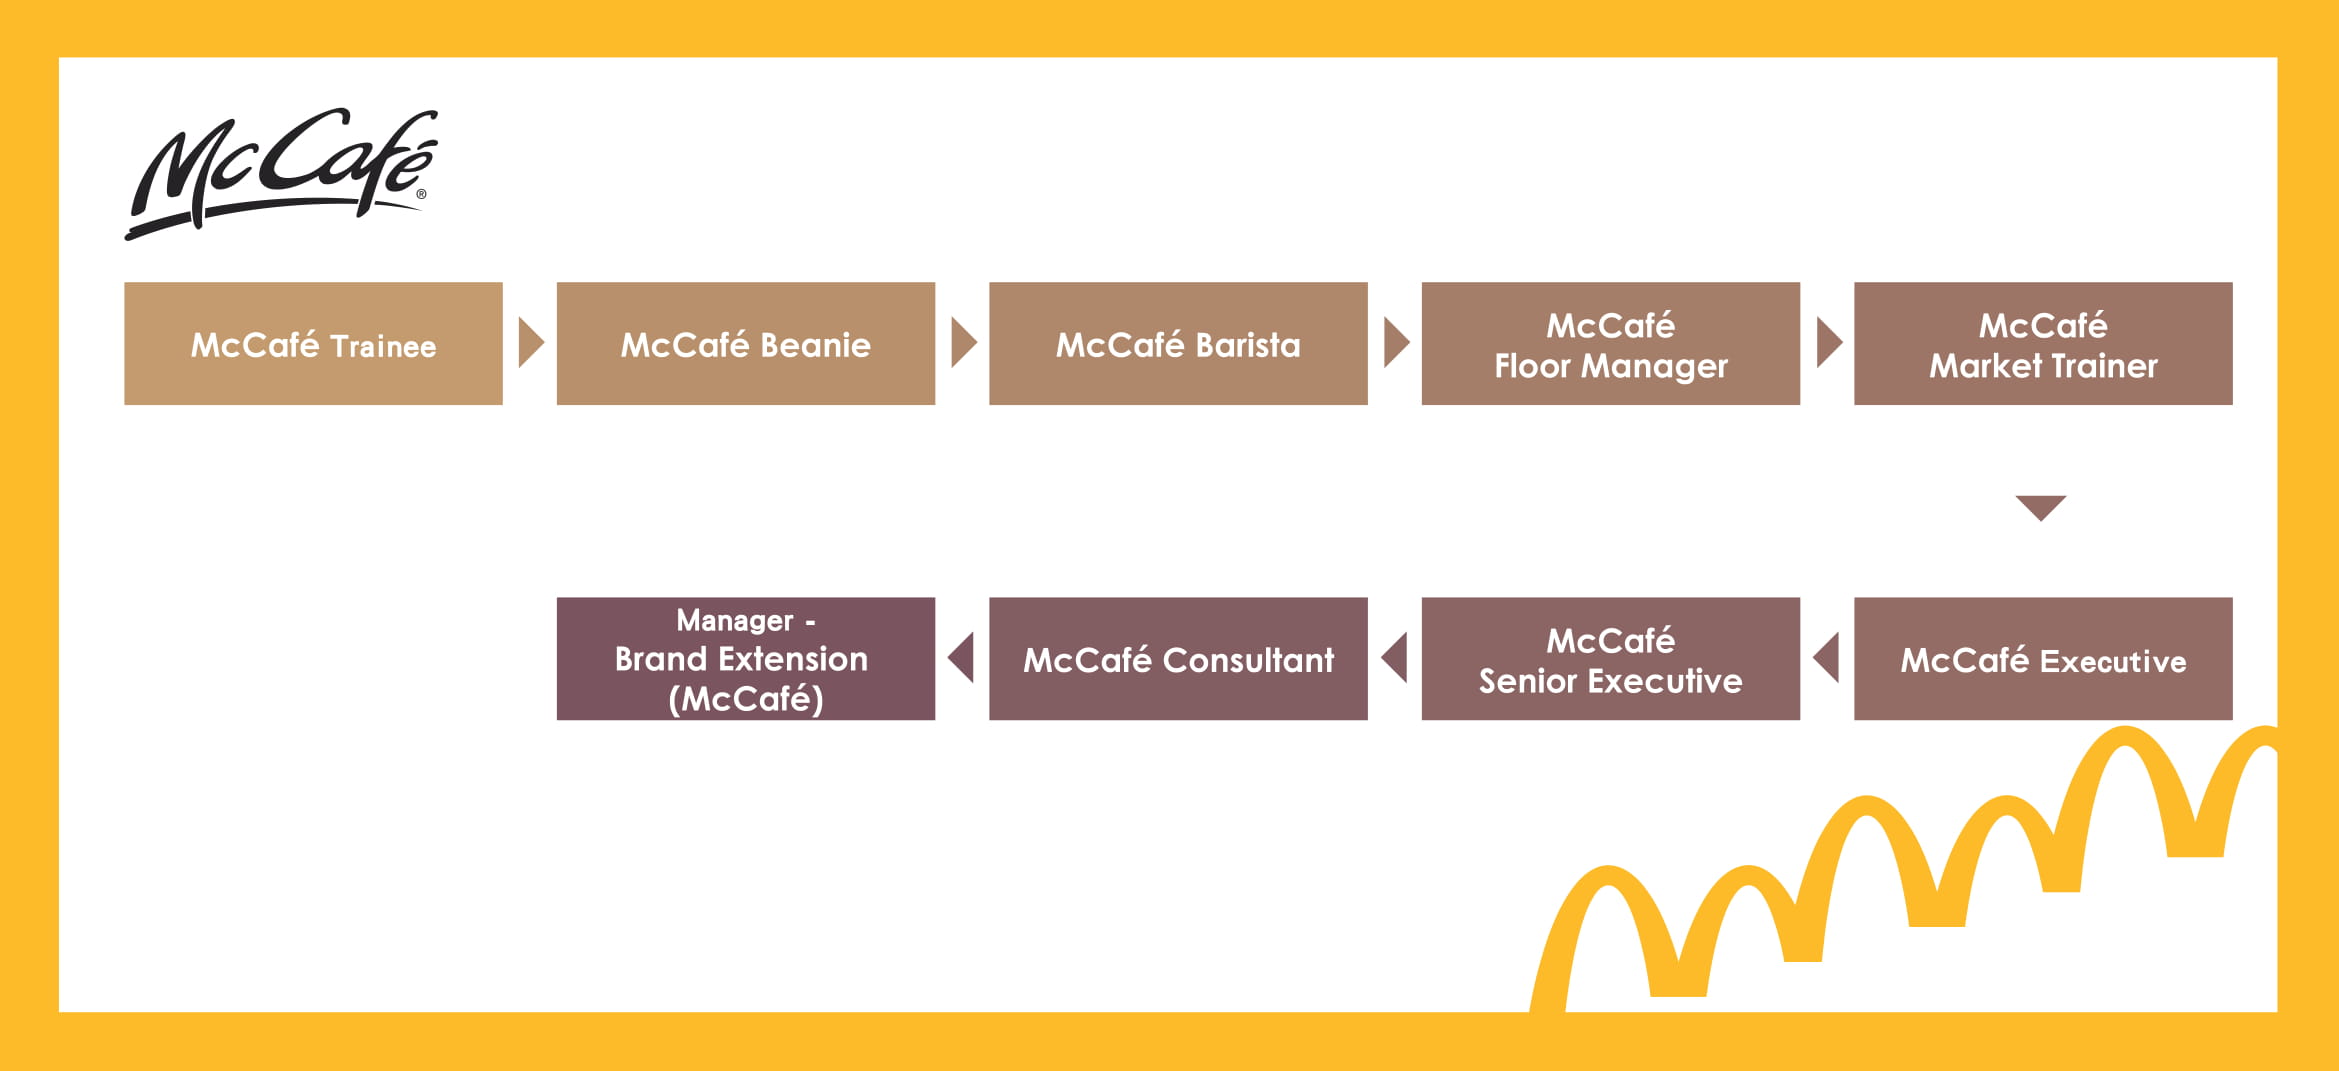 Careers At Mcdonald S